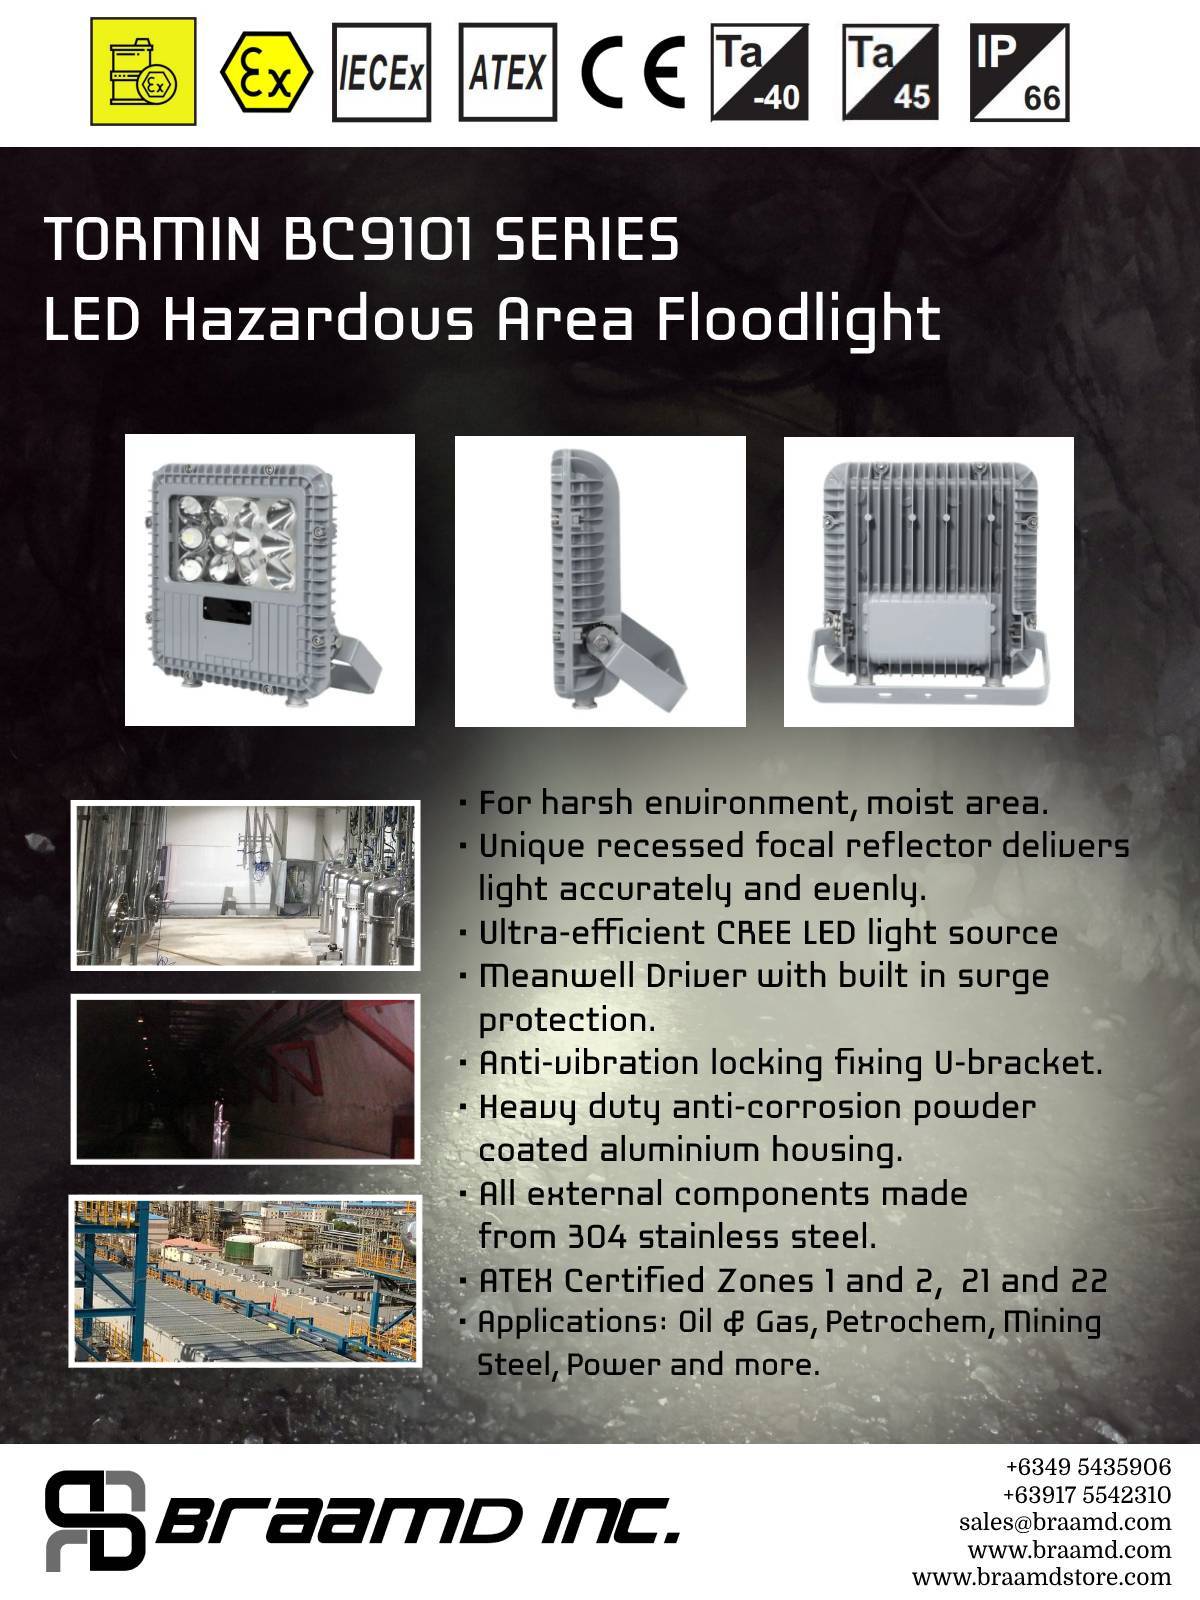 TORMIN BC9101 SERIES LED Hazardous Area Floodlight